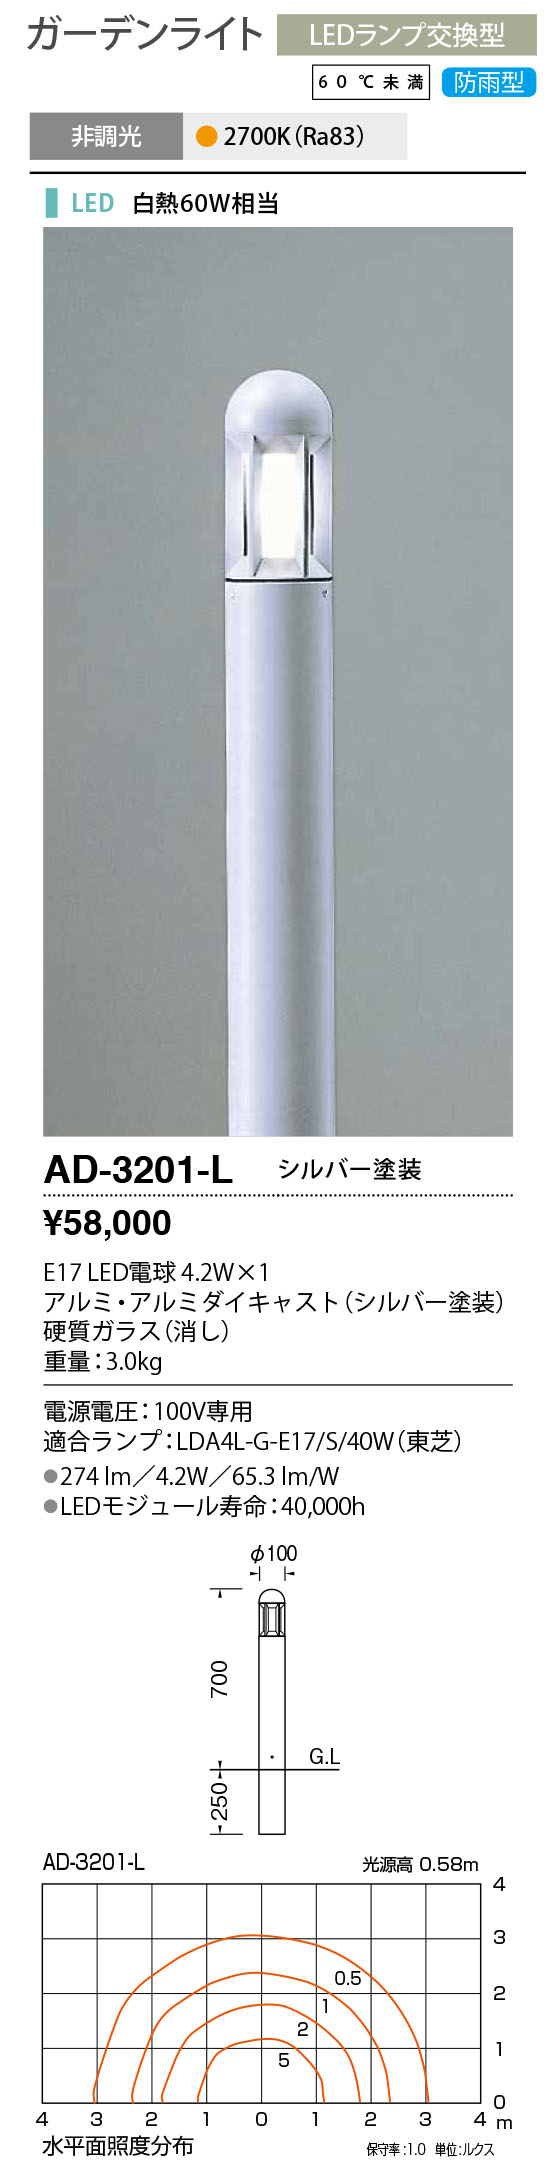 AD-3201-L(山田照明) 商品詳細 ～ 照明器具・換気扇他、電設資材販売のブライト